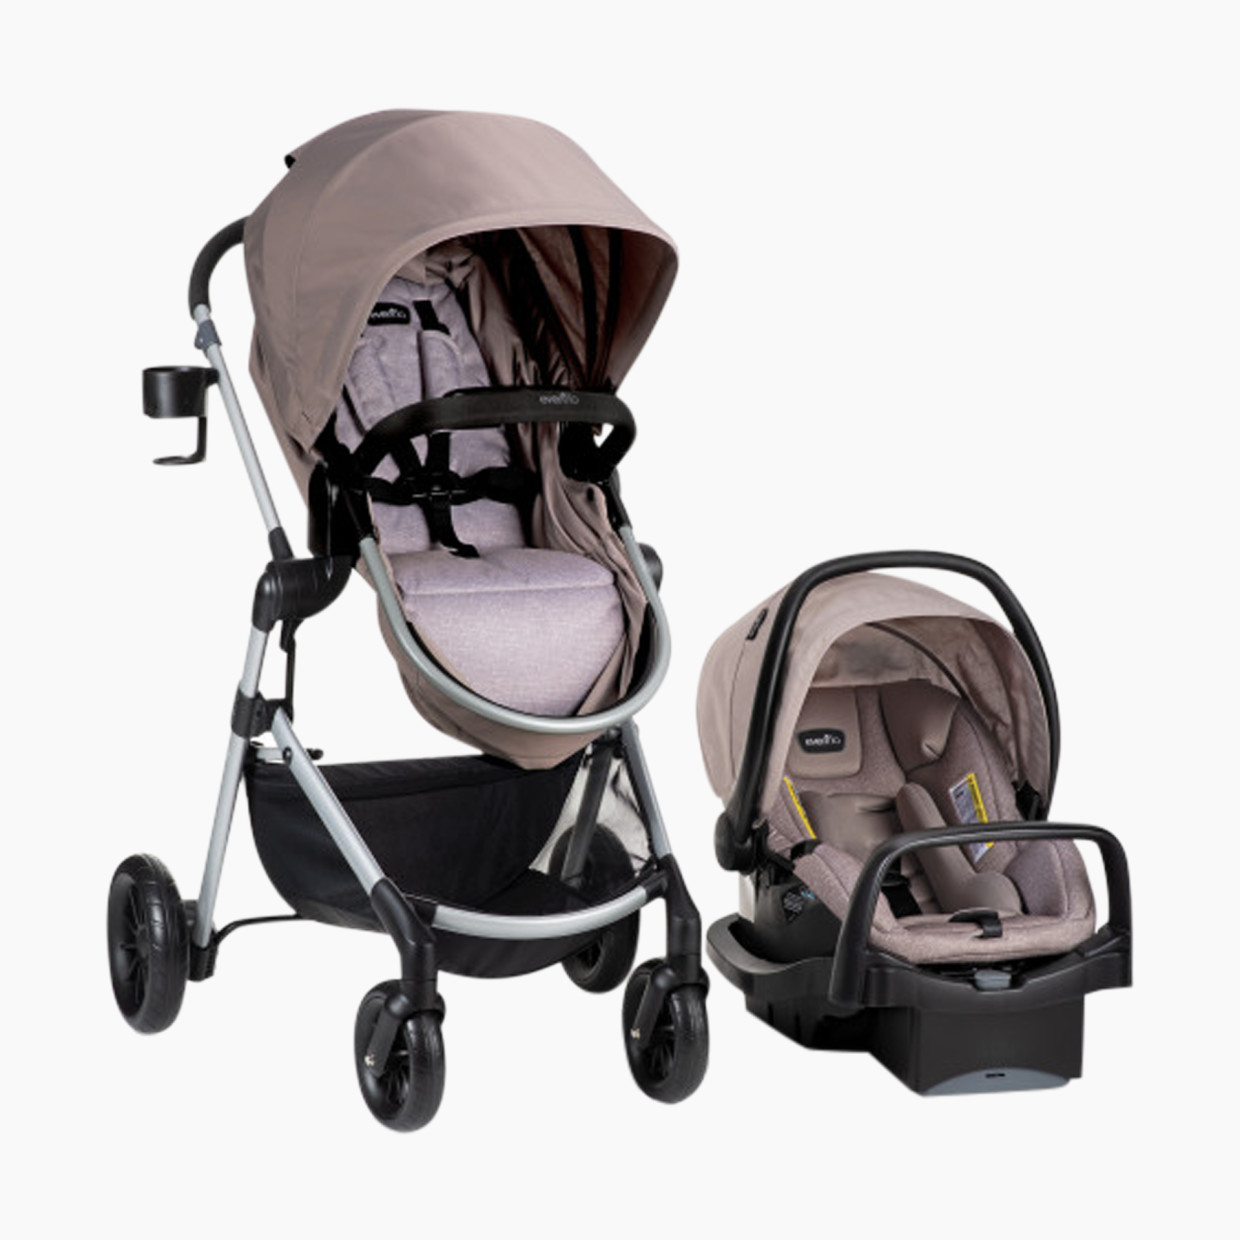 Evenflo Pivot Travel System with Safemax Infant Car Seat - Sandstone.